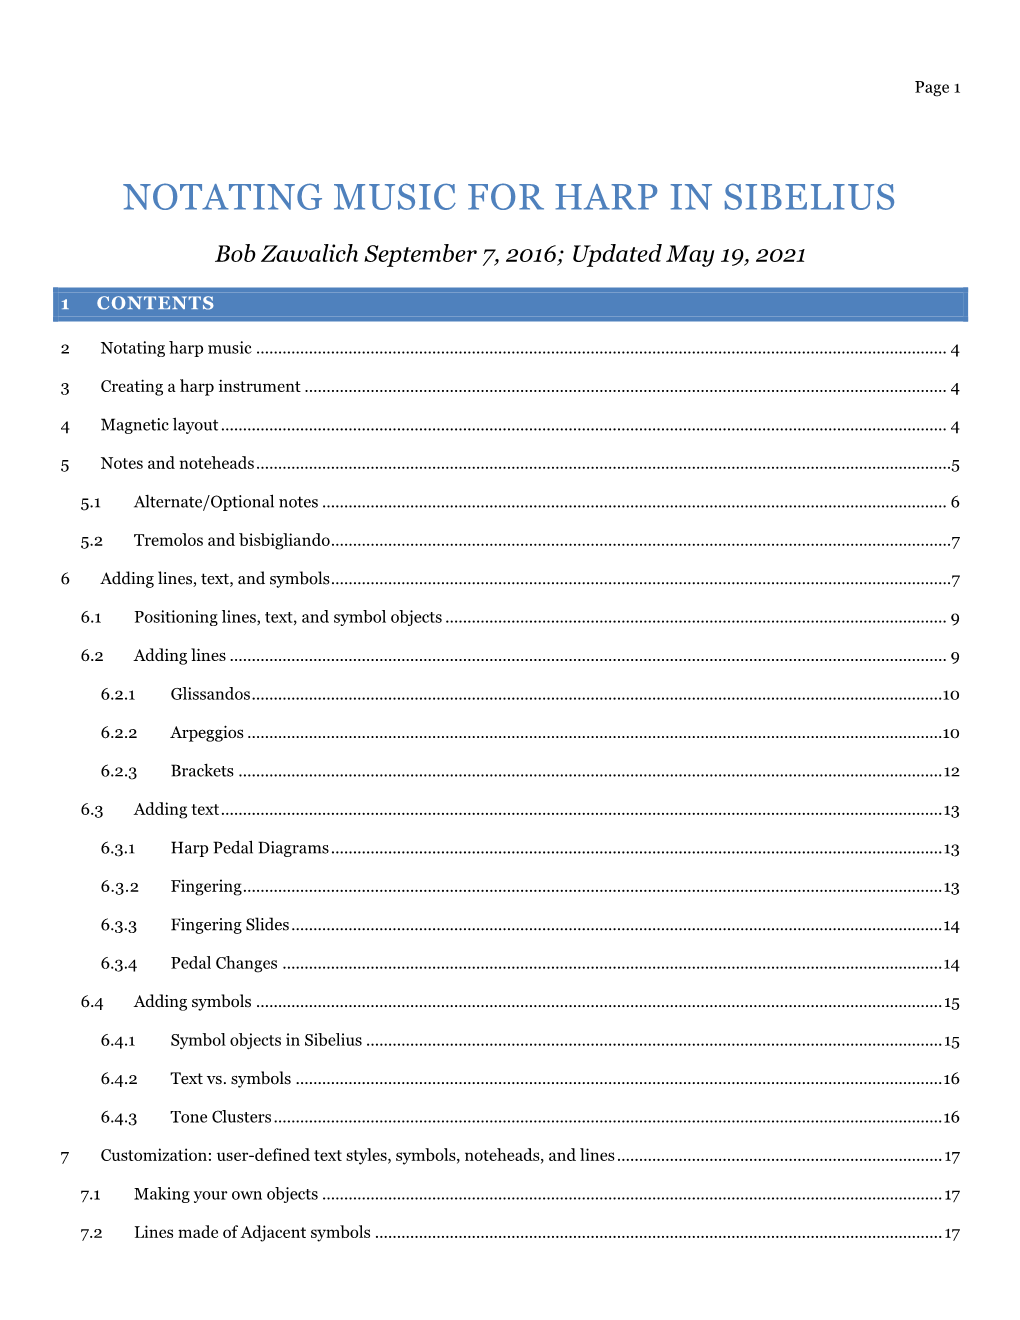 Notating Music for Harp in Sibelius